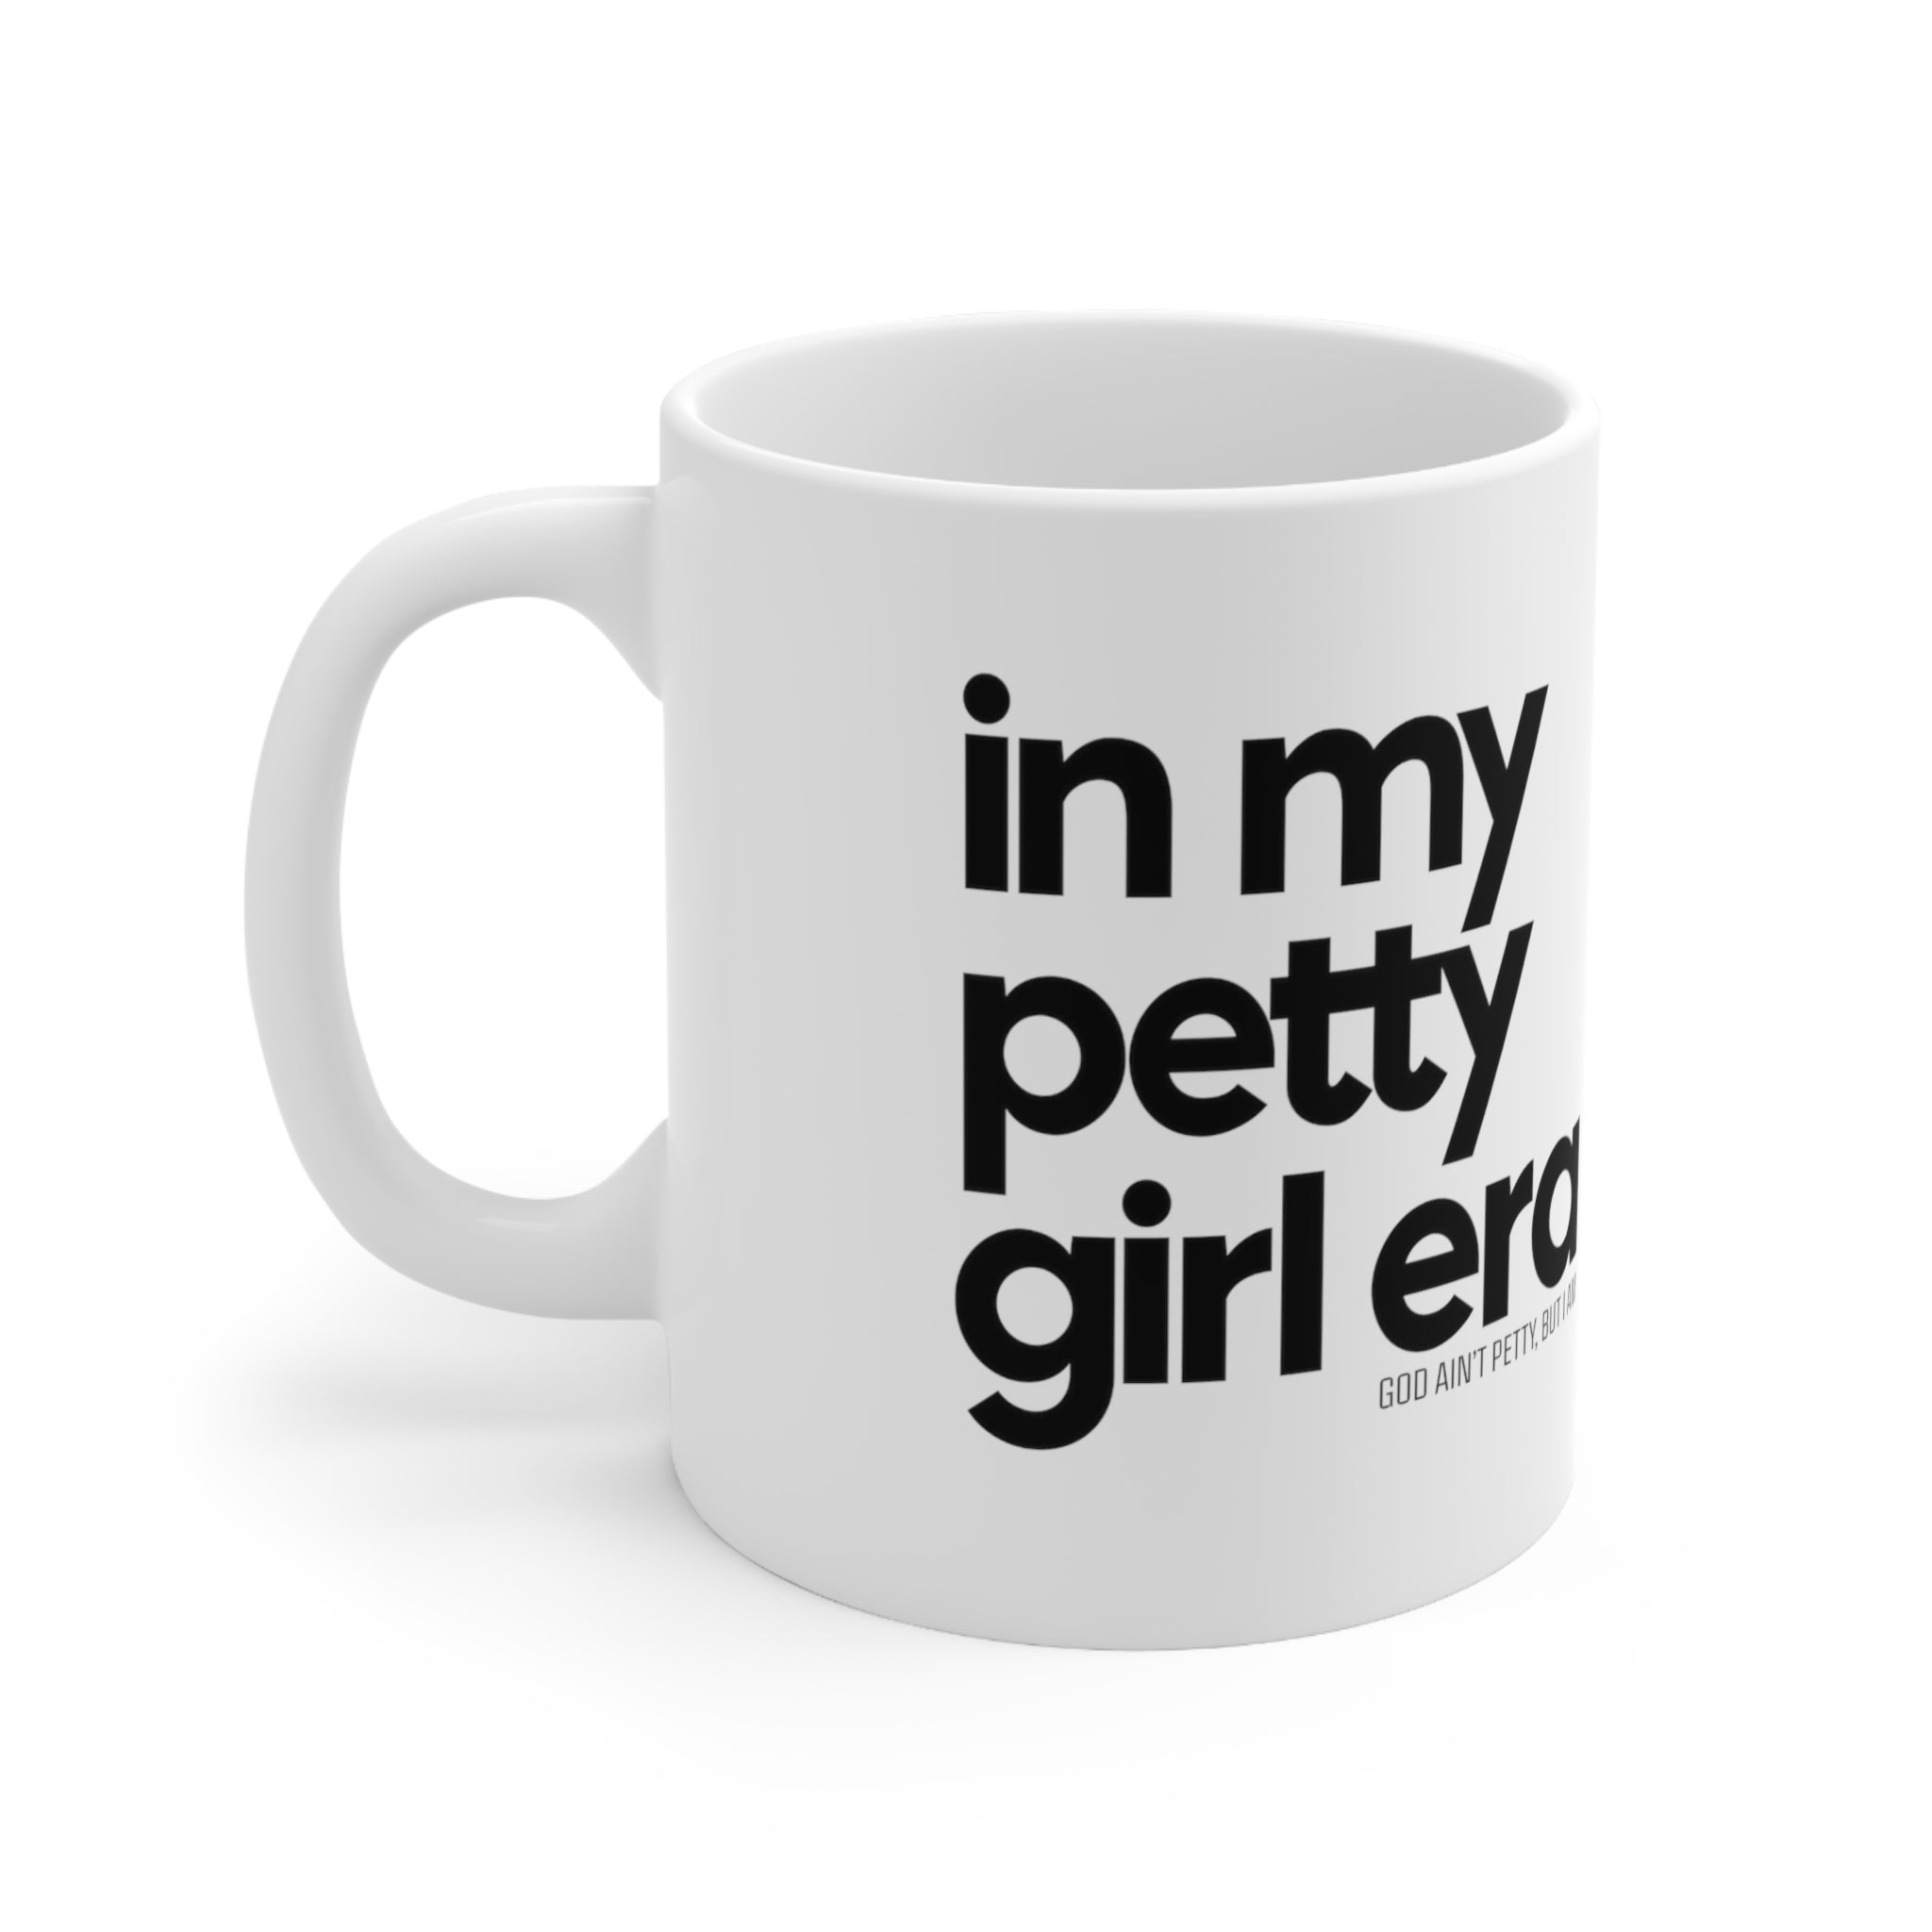 In my petty girl era Mug 11oz (White/Black)-Mug-The Original God Ain't Petty But I Am